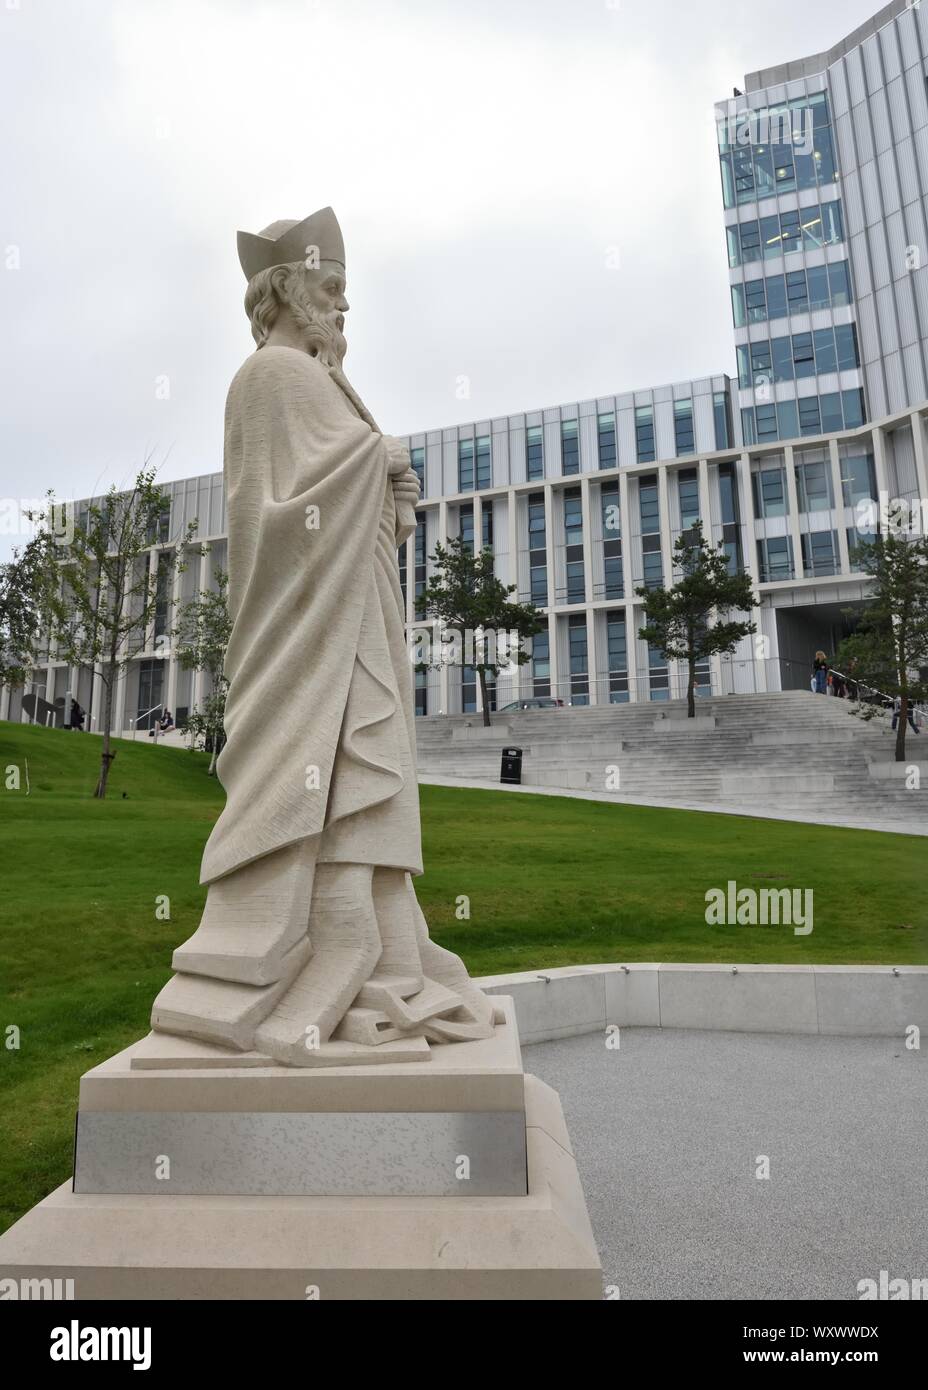 A sandstone statue of Saint Mungo outside City of Glasgow College, Scotland, UK, Europe Stock Photo